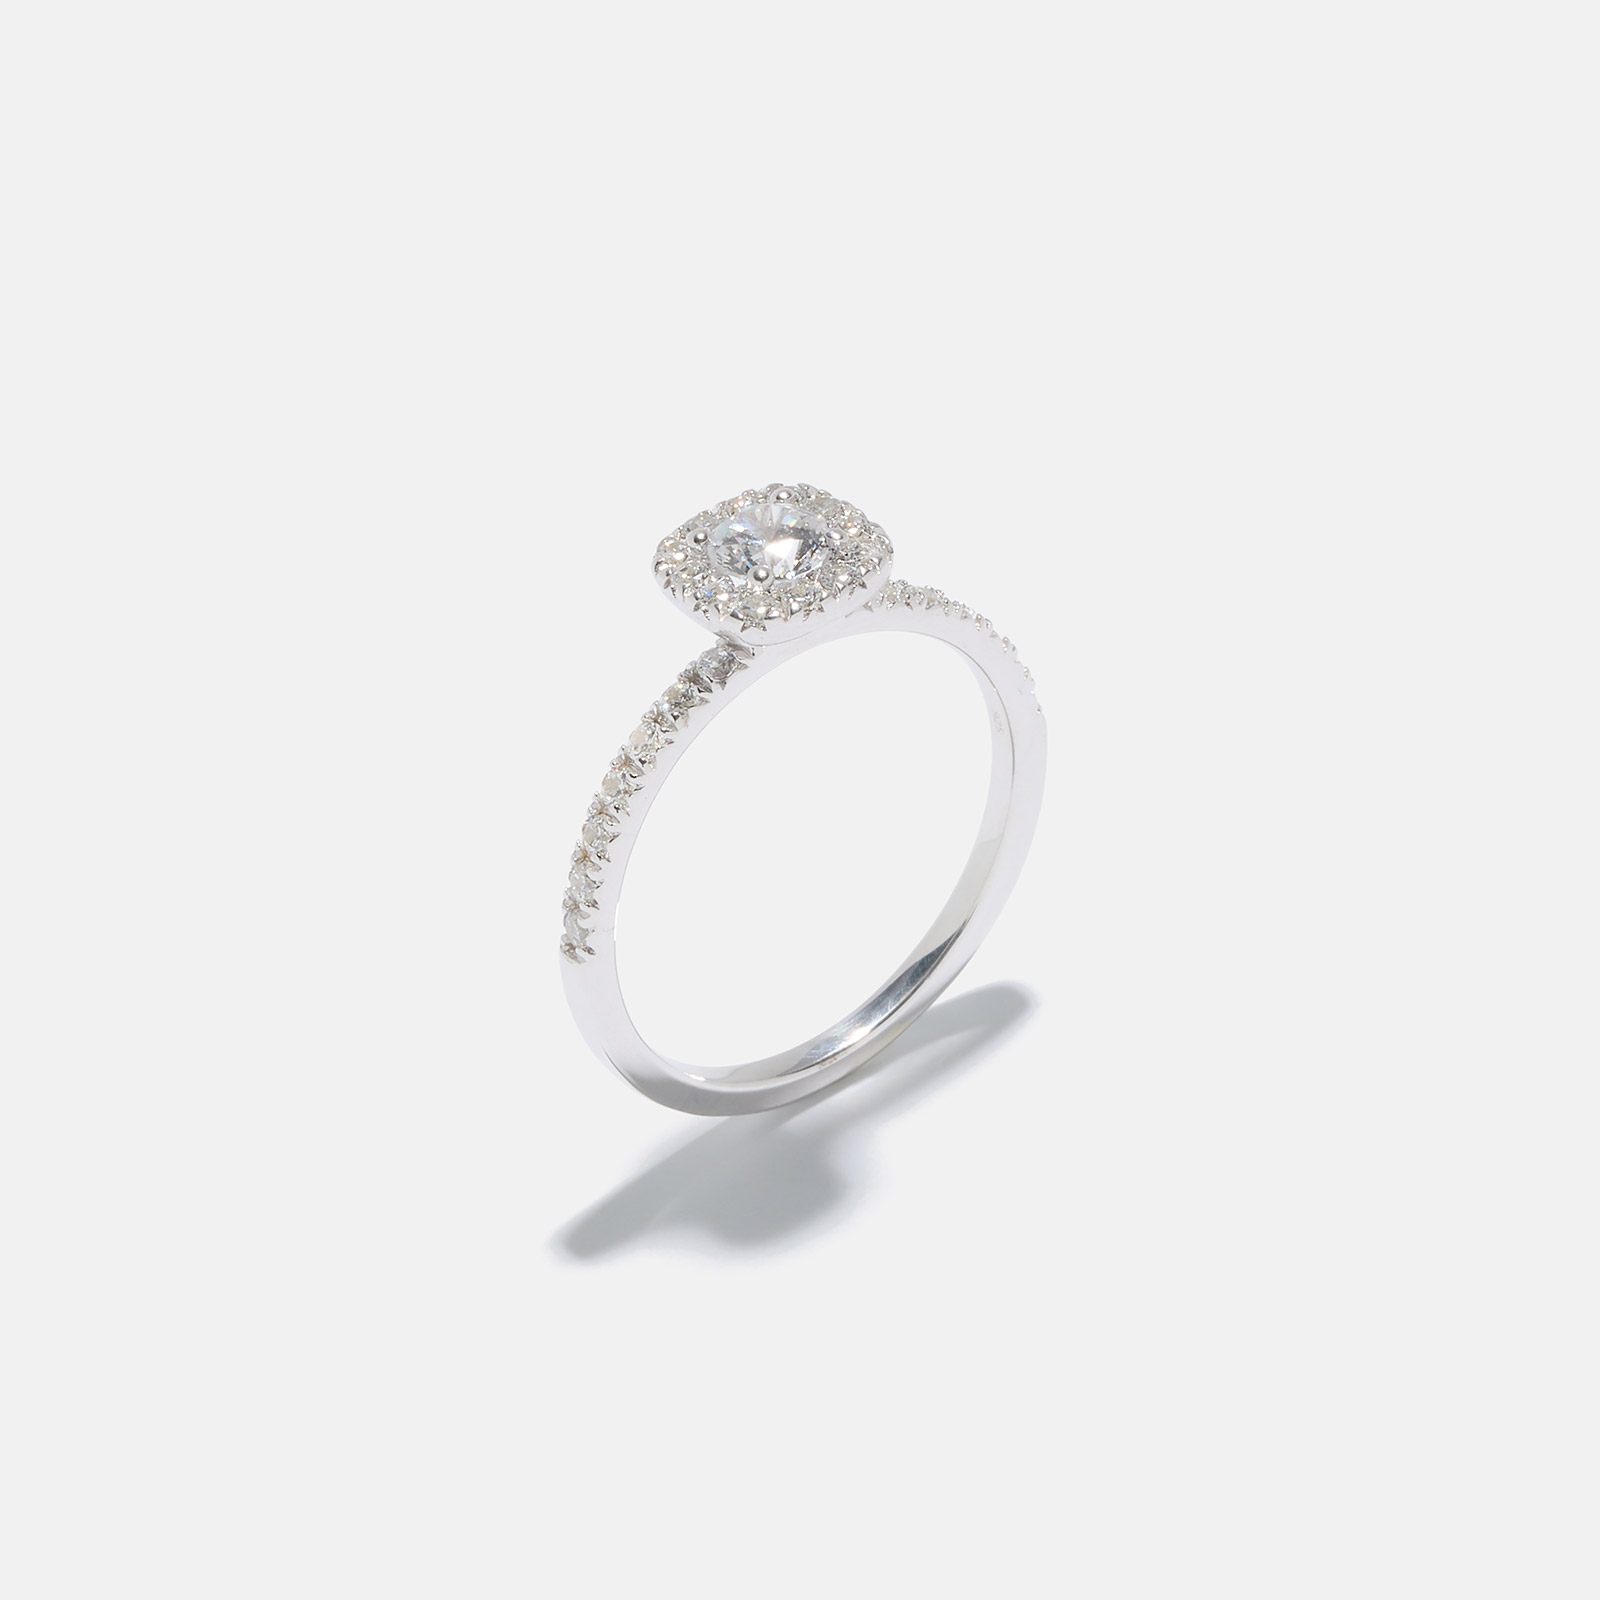 Ring Sabina - 18k vitguld, labbodlade diamanter 0,3 carat